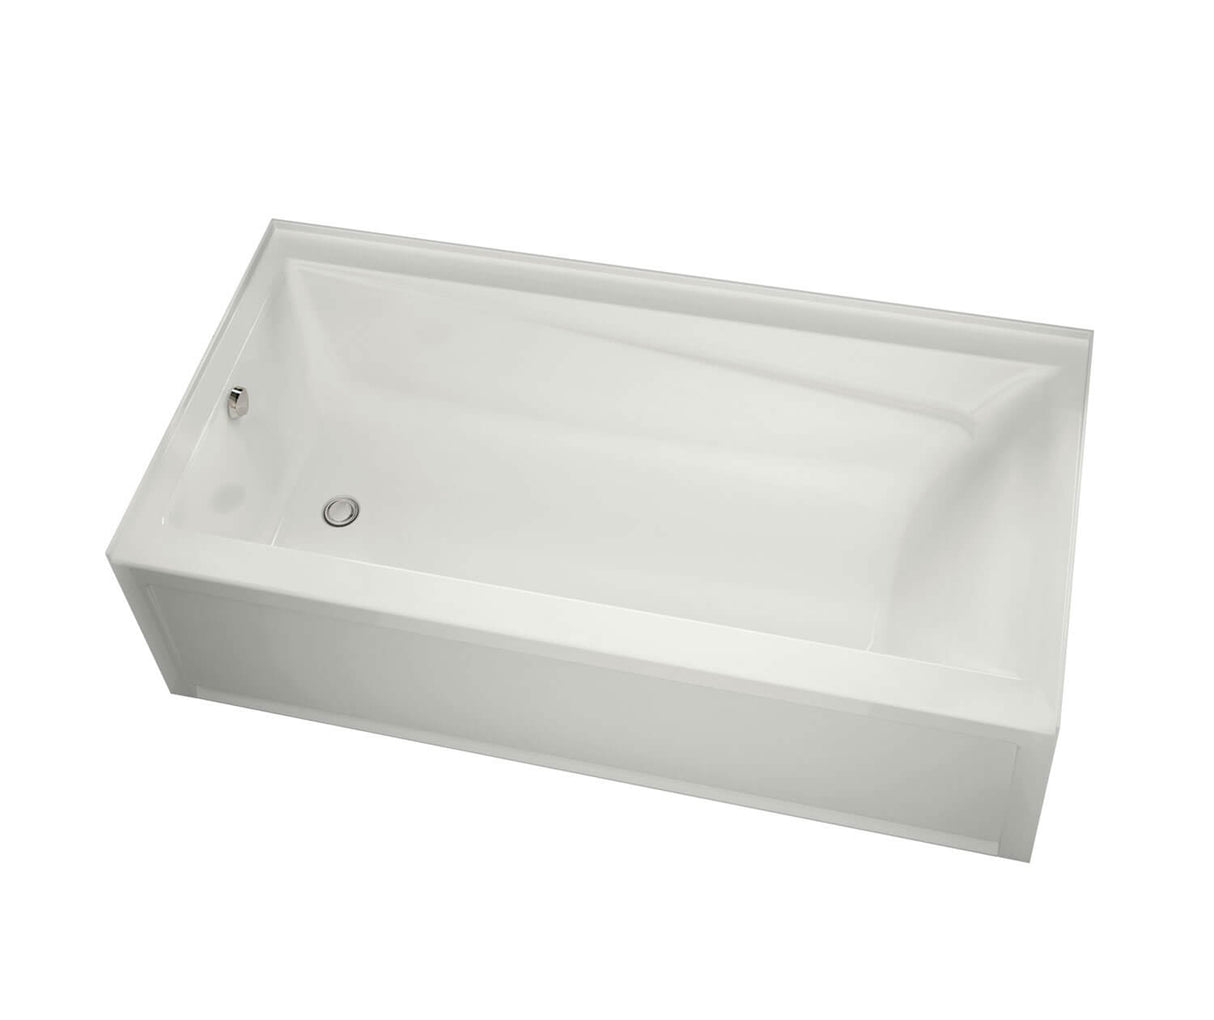 MAAX 106222-000-001-103 Exhibit 6632 IFS AFR Acrylic Alcove Right-Hand Drain Bathtub in White